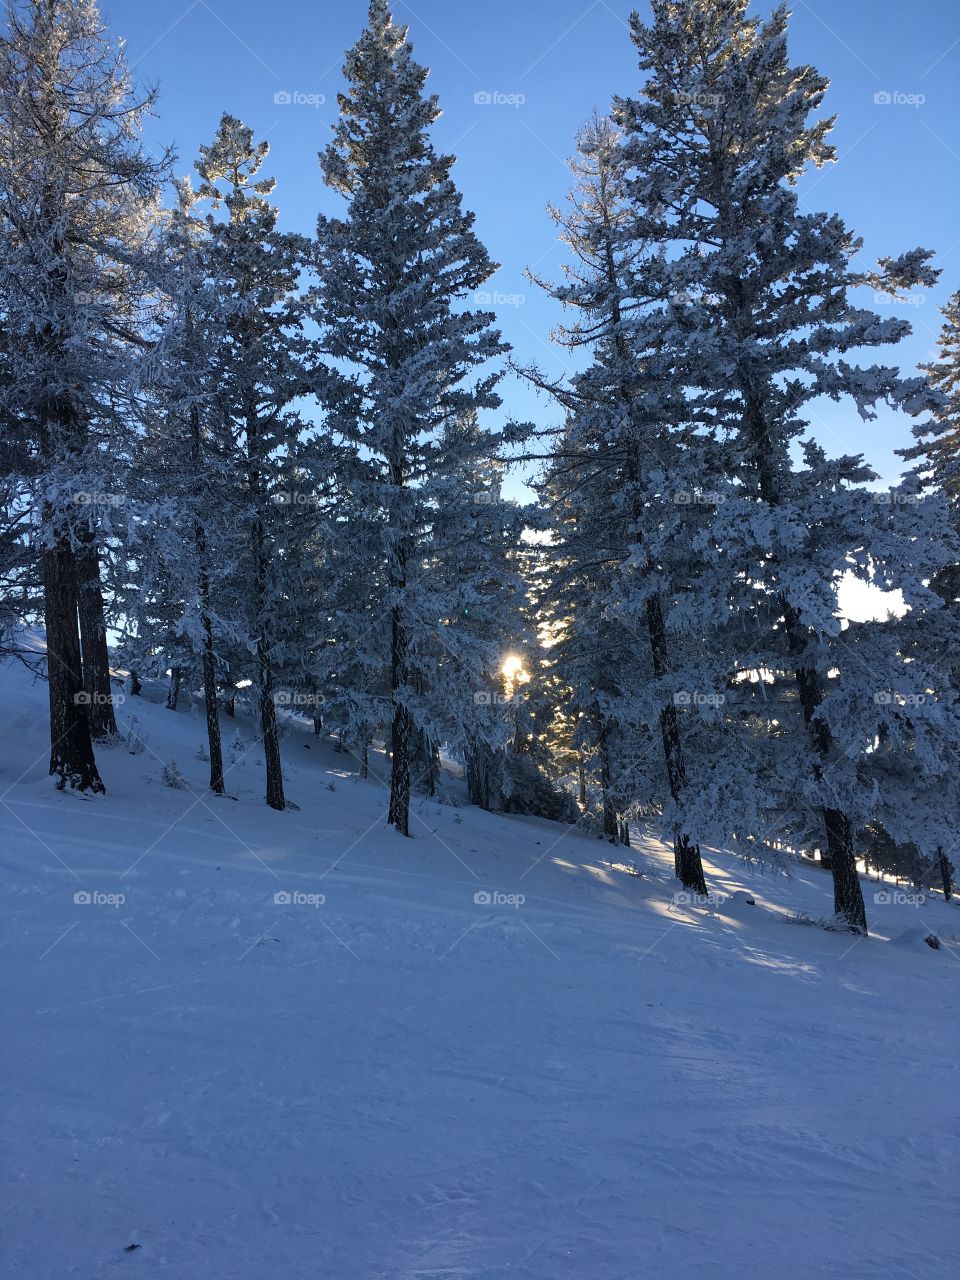 Sun through trees and snow